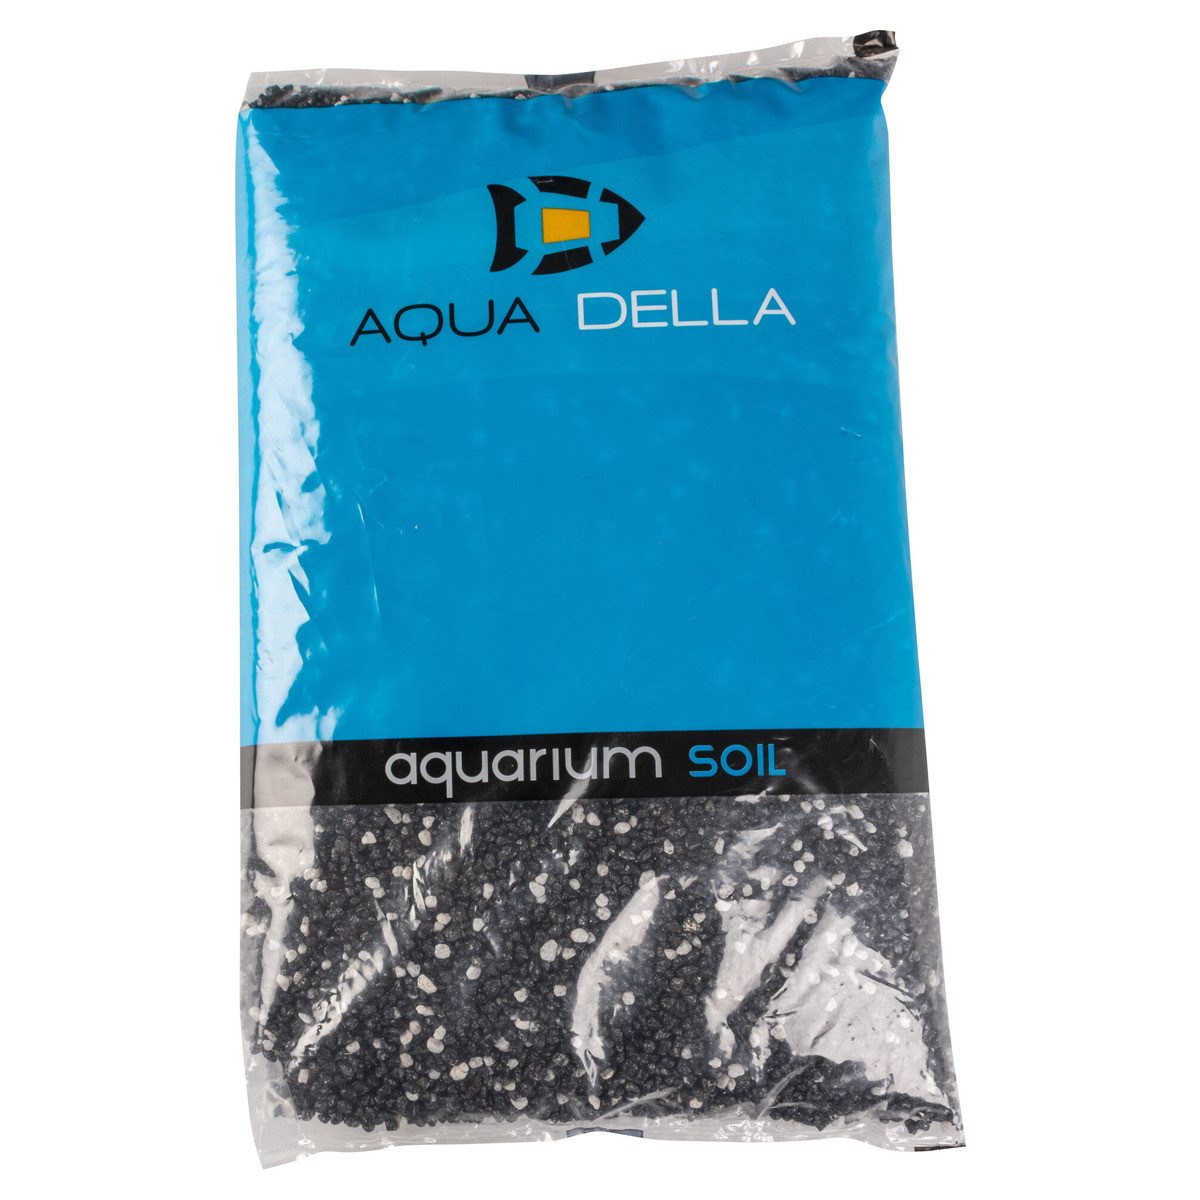 Europet-Bernina Aquarien-Substrat Aquarienkies Mix schwarz Inhalt: 10 kg